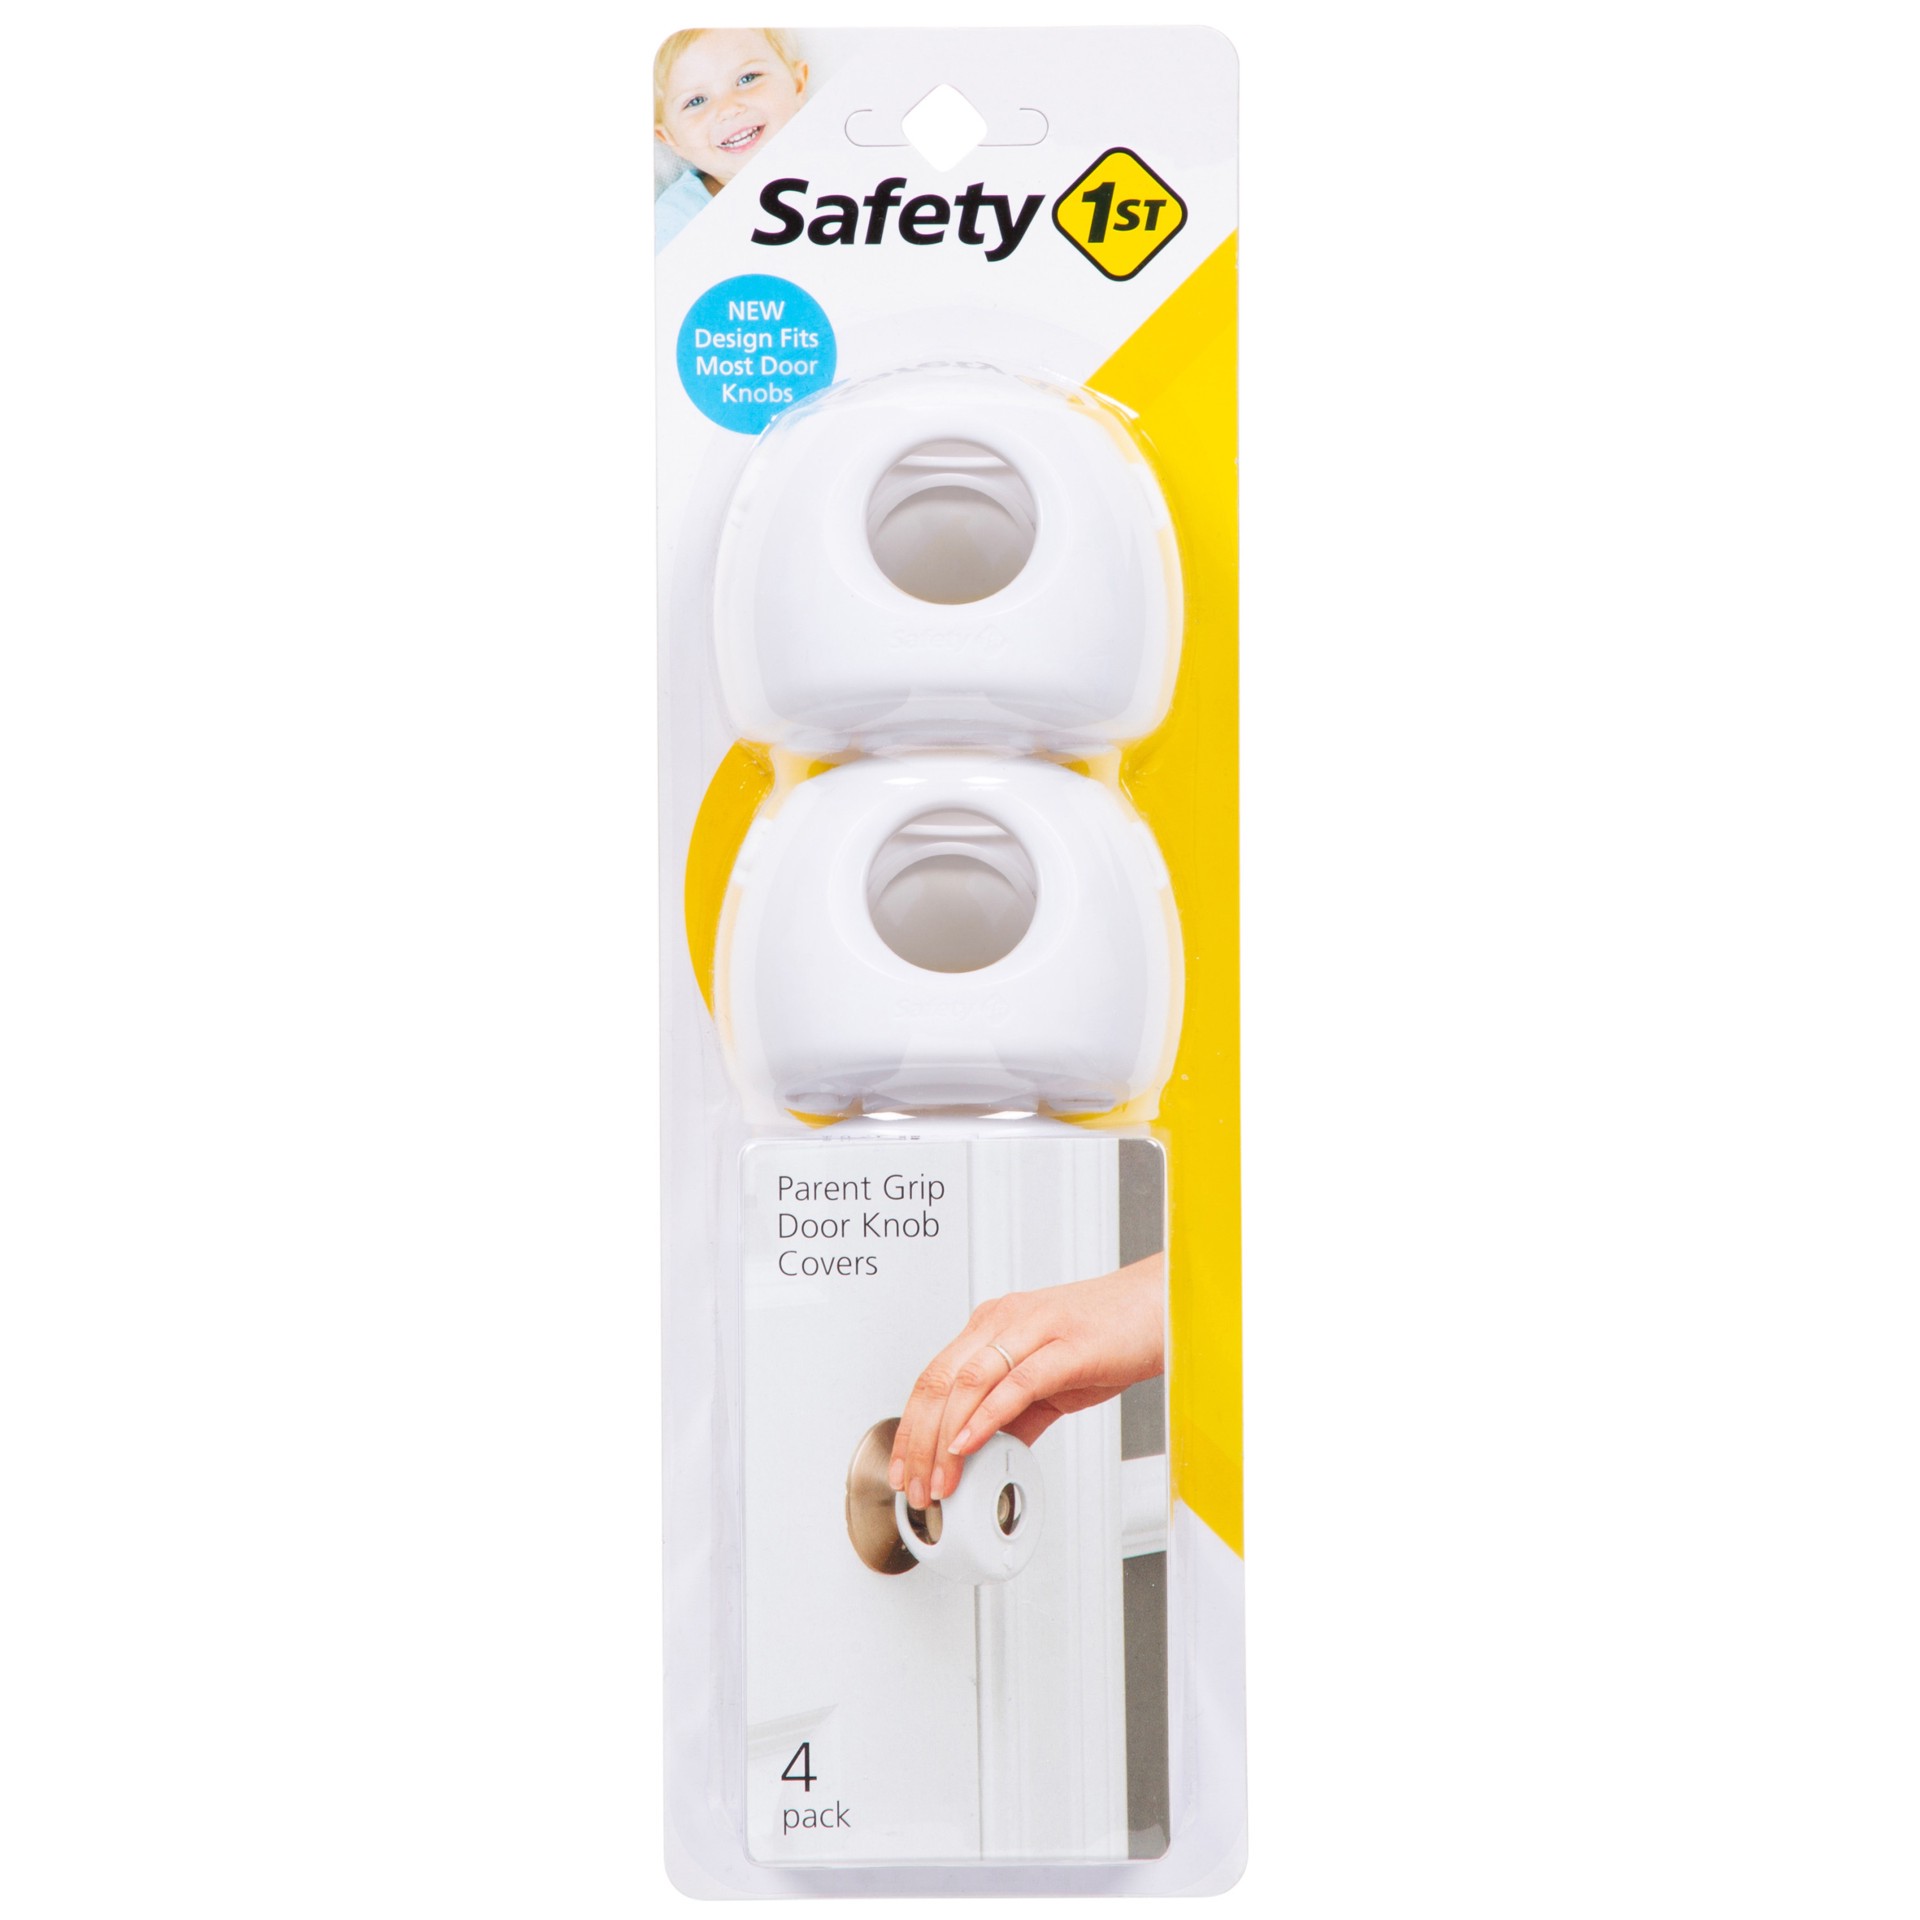 slide 1 of 28, Safety 1ˢᵗ Parent Grip Door Knob Covers, White, 0.51 lb